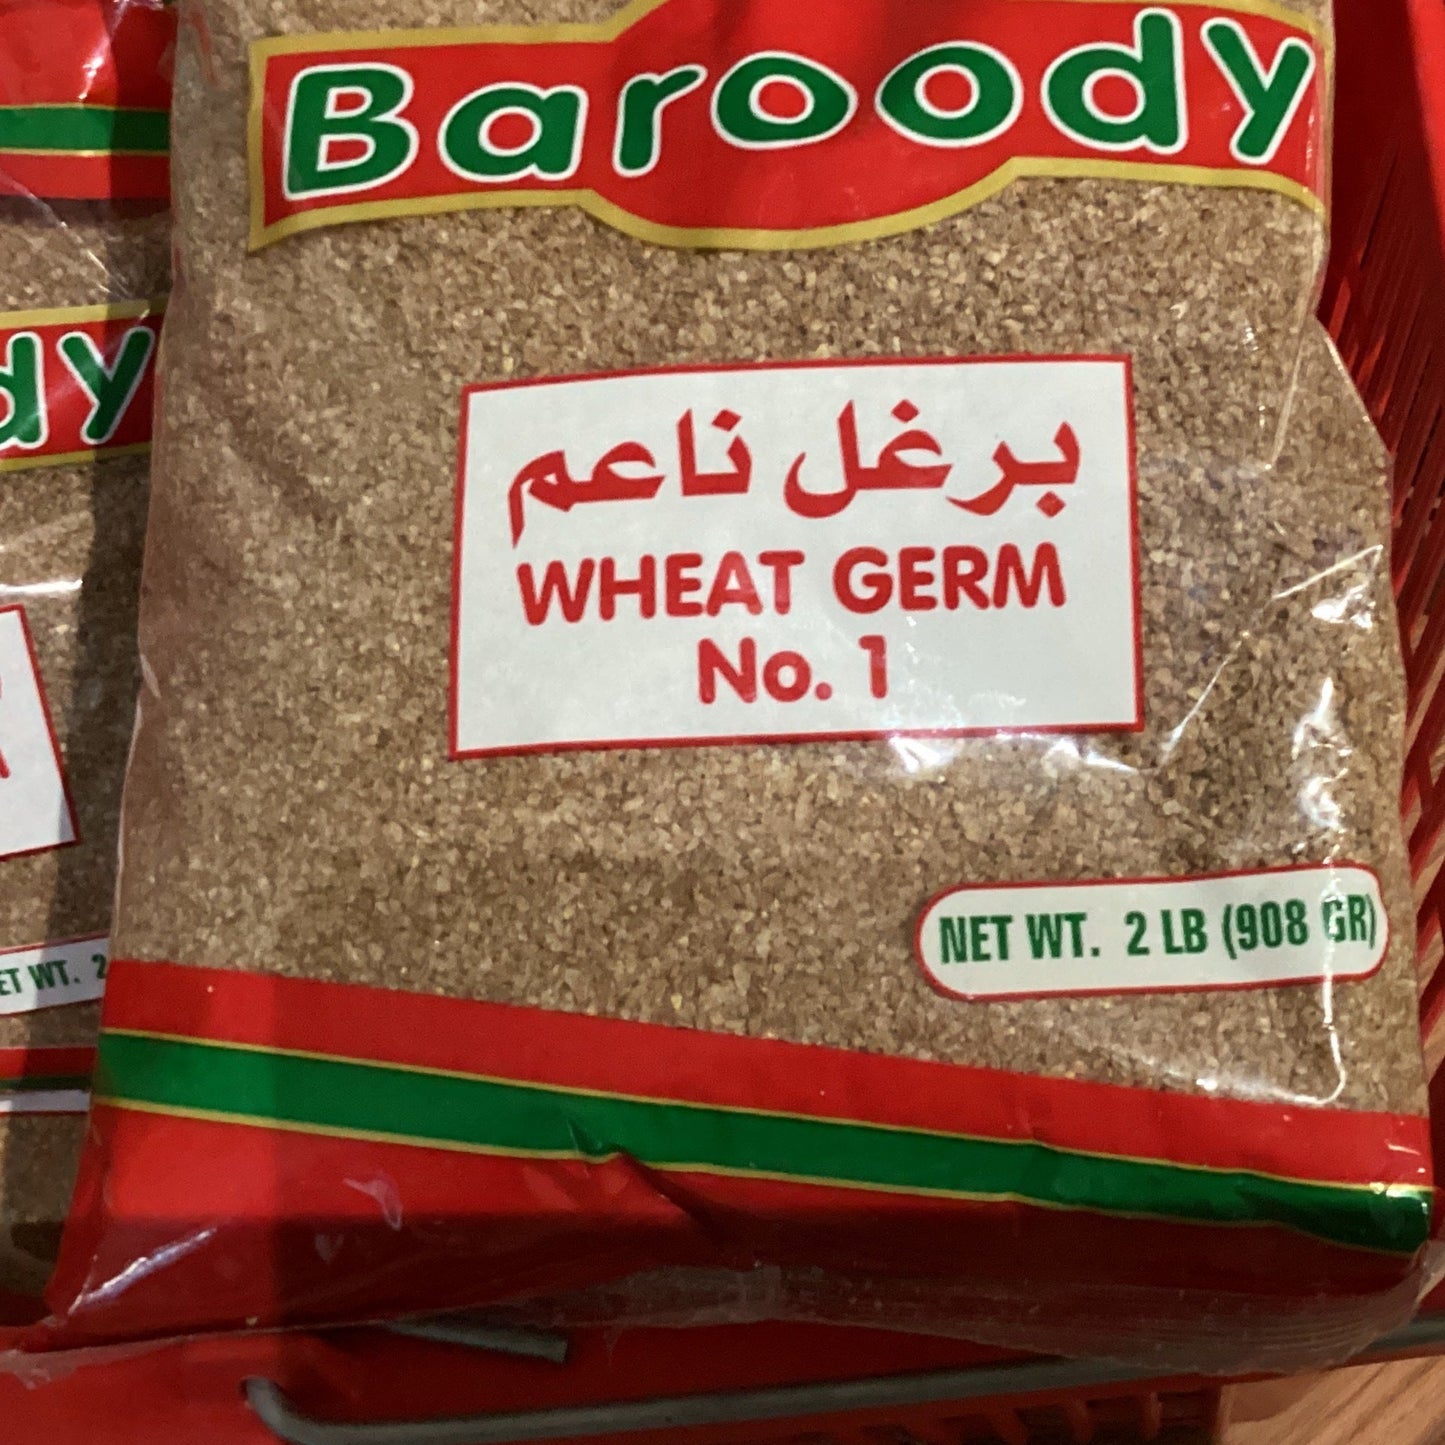 Baroody Wheat Germ